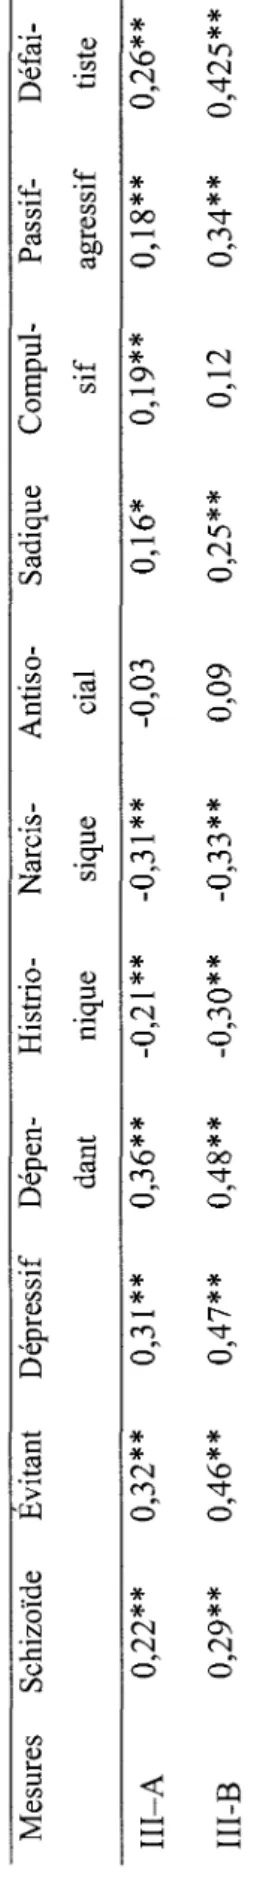 Tableau 4  Correlations entre l'/Z/partie A et B et les echelles de personnalite du MCMI-III  Mesures  III-A  III-B Schizoi'de 0,22** 0,29** Evitant 0,32** 0,46** Depressif 0,31** 0,47** Depen-dant 0,36** 0,48** Histrio-nique -0,21** -0,30** Narcis-sique -